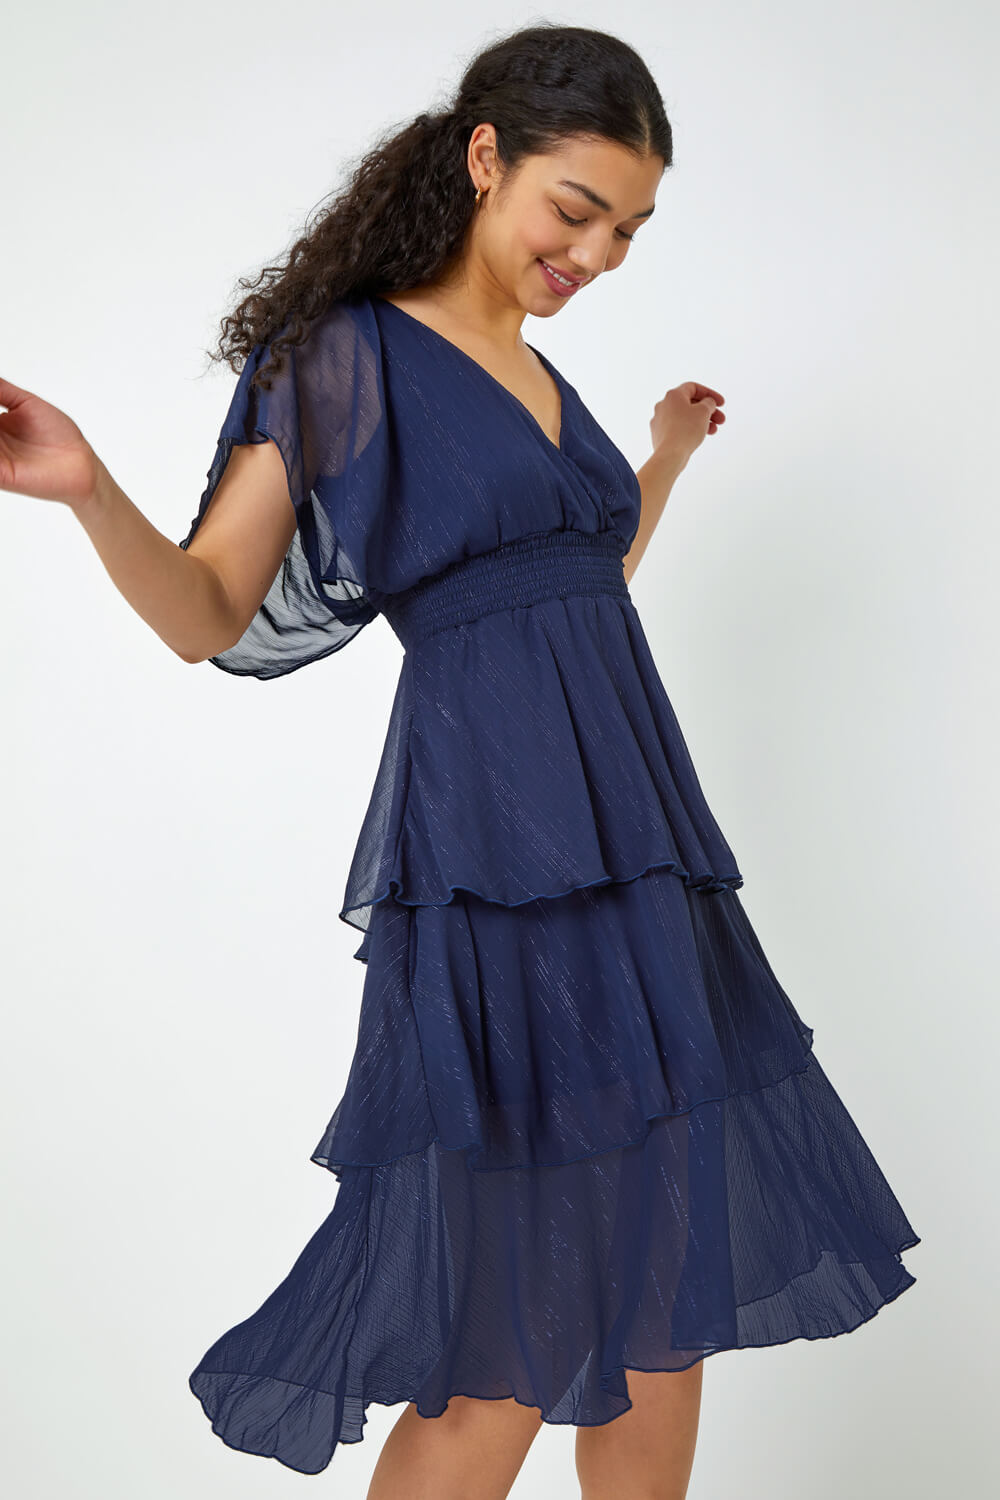 Shop Stunning Teal Hued Tiered Long Dresses for Women Online